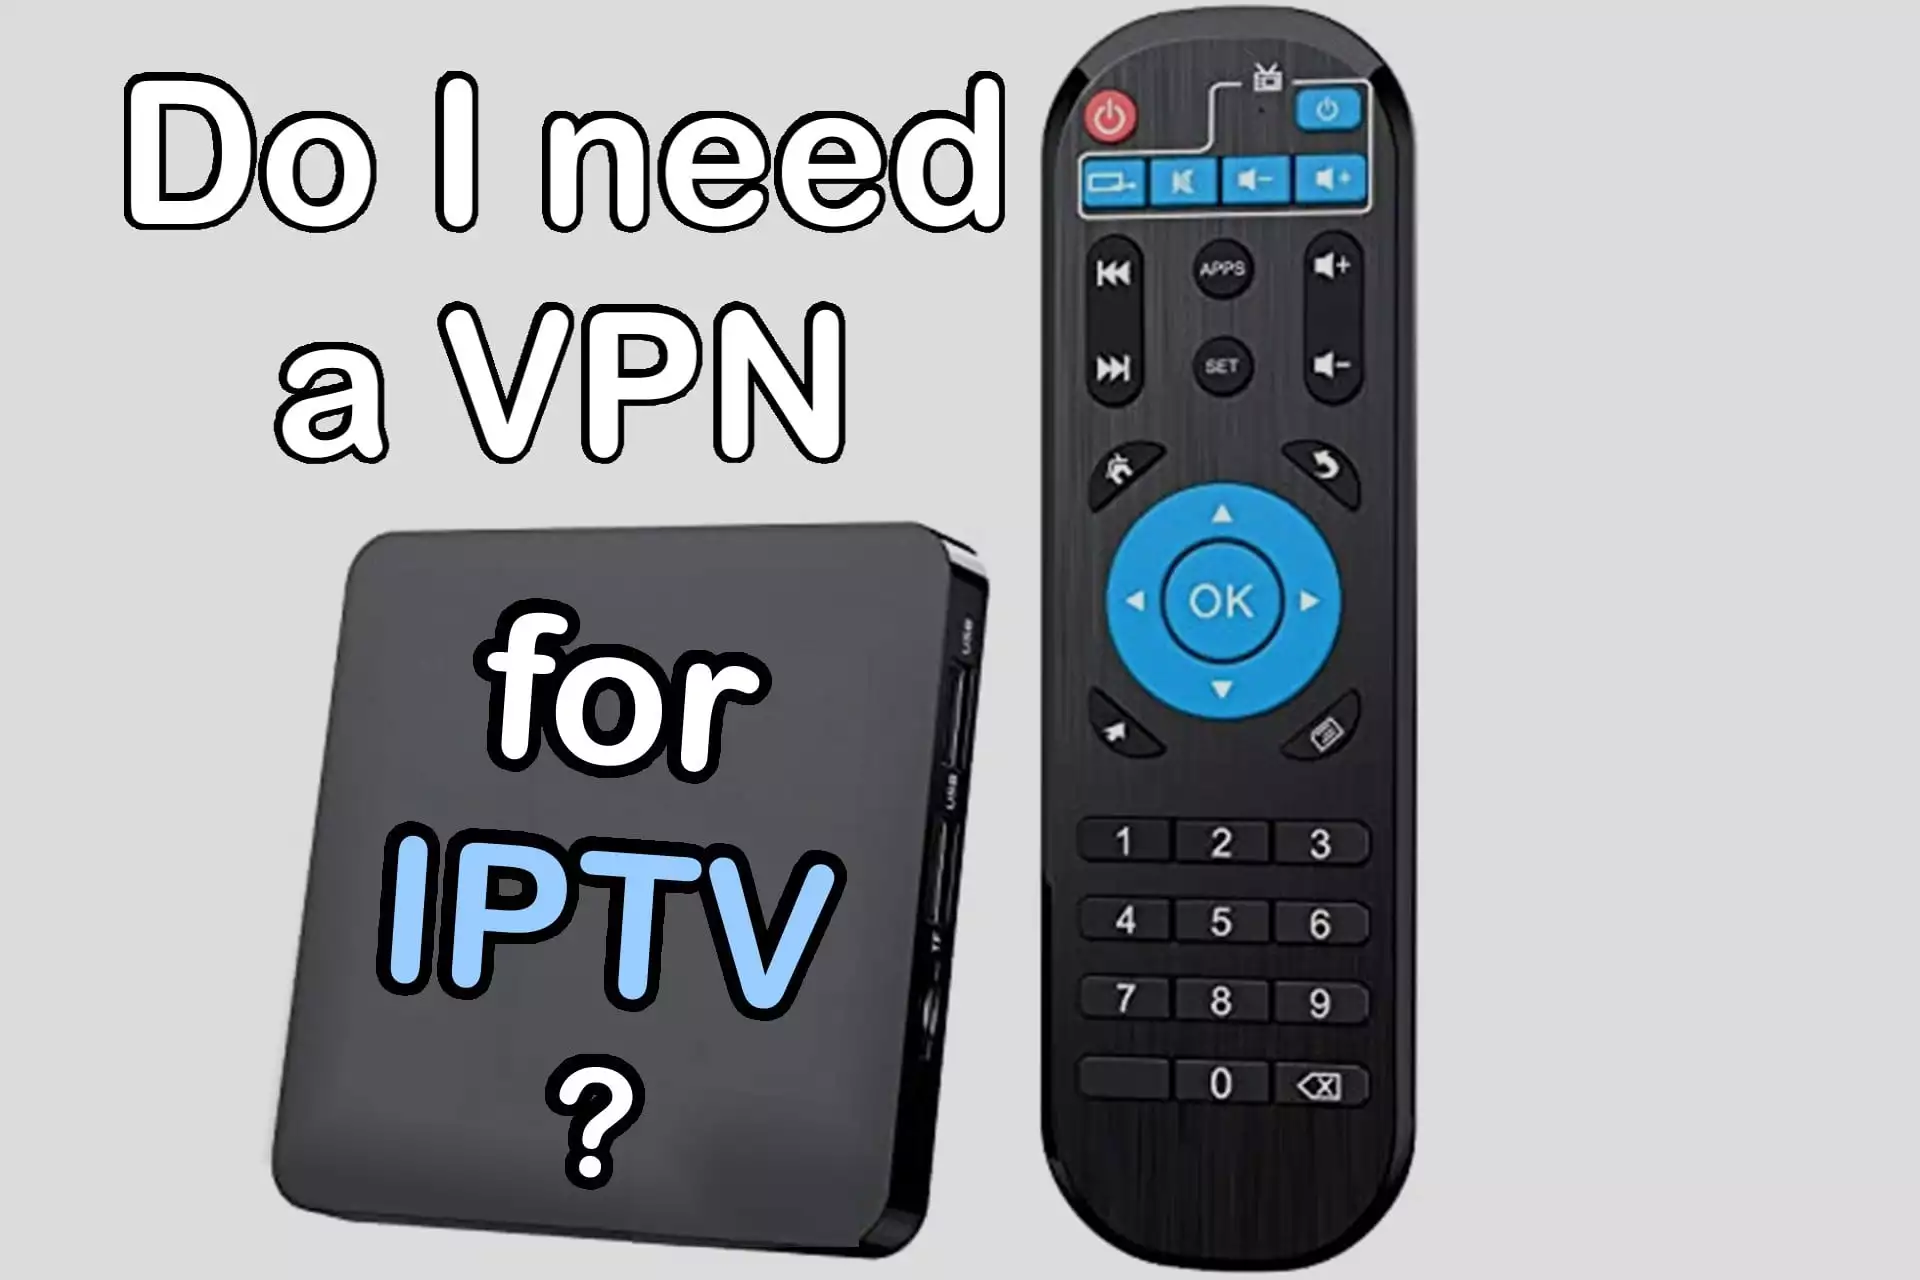 Do I need a VPN for IPTV